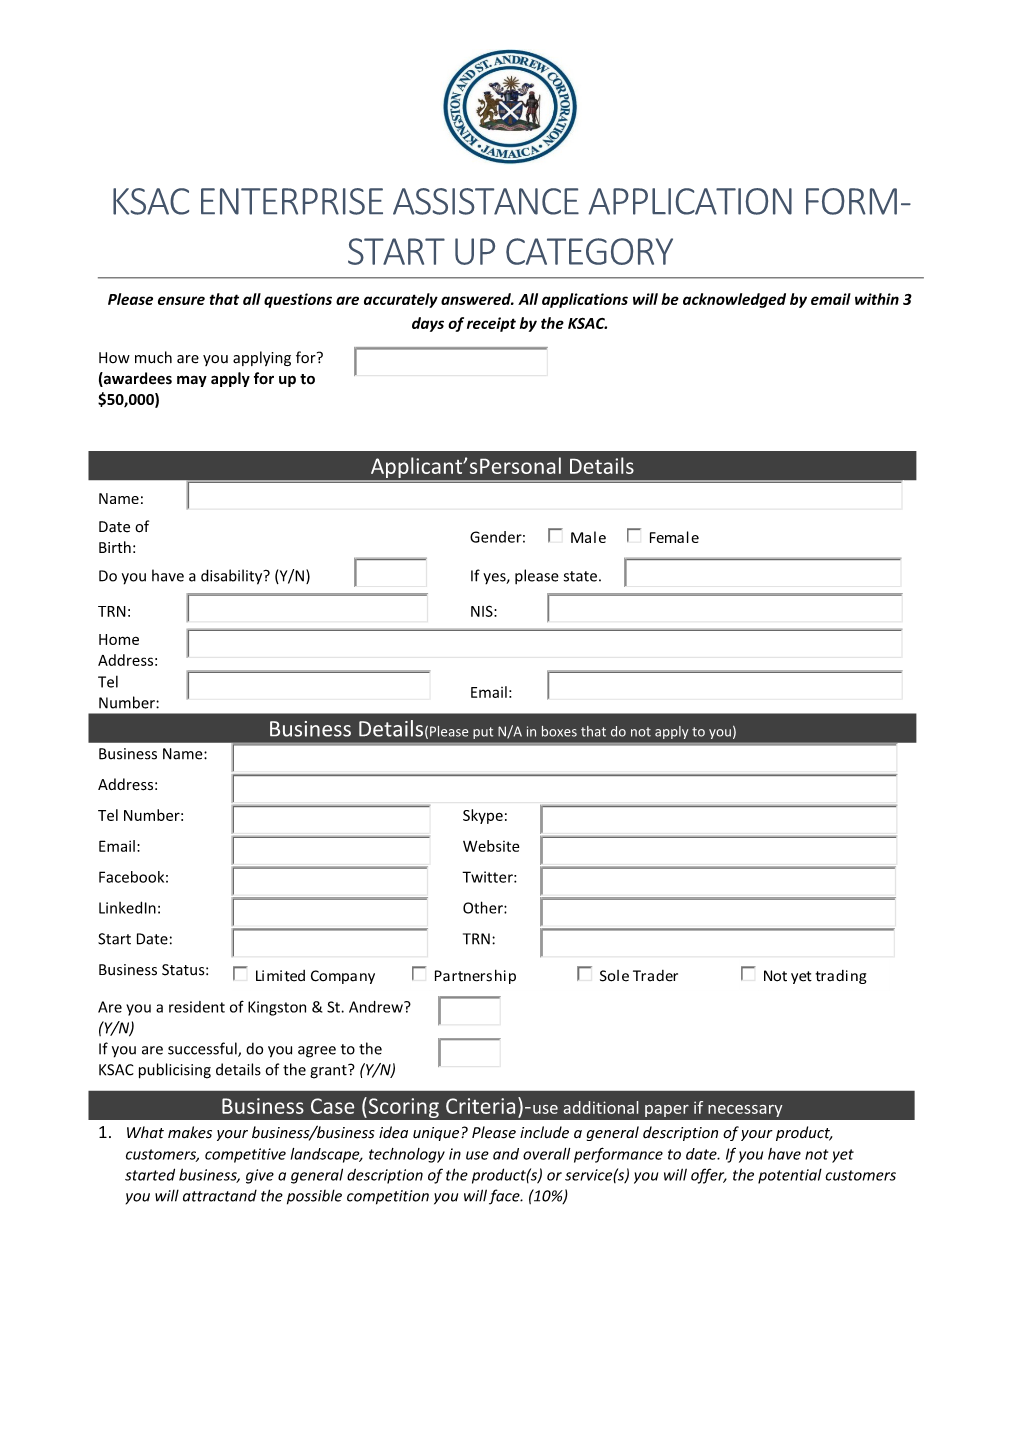 KSAC Enterprise Assistance Application Form-Start up Category